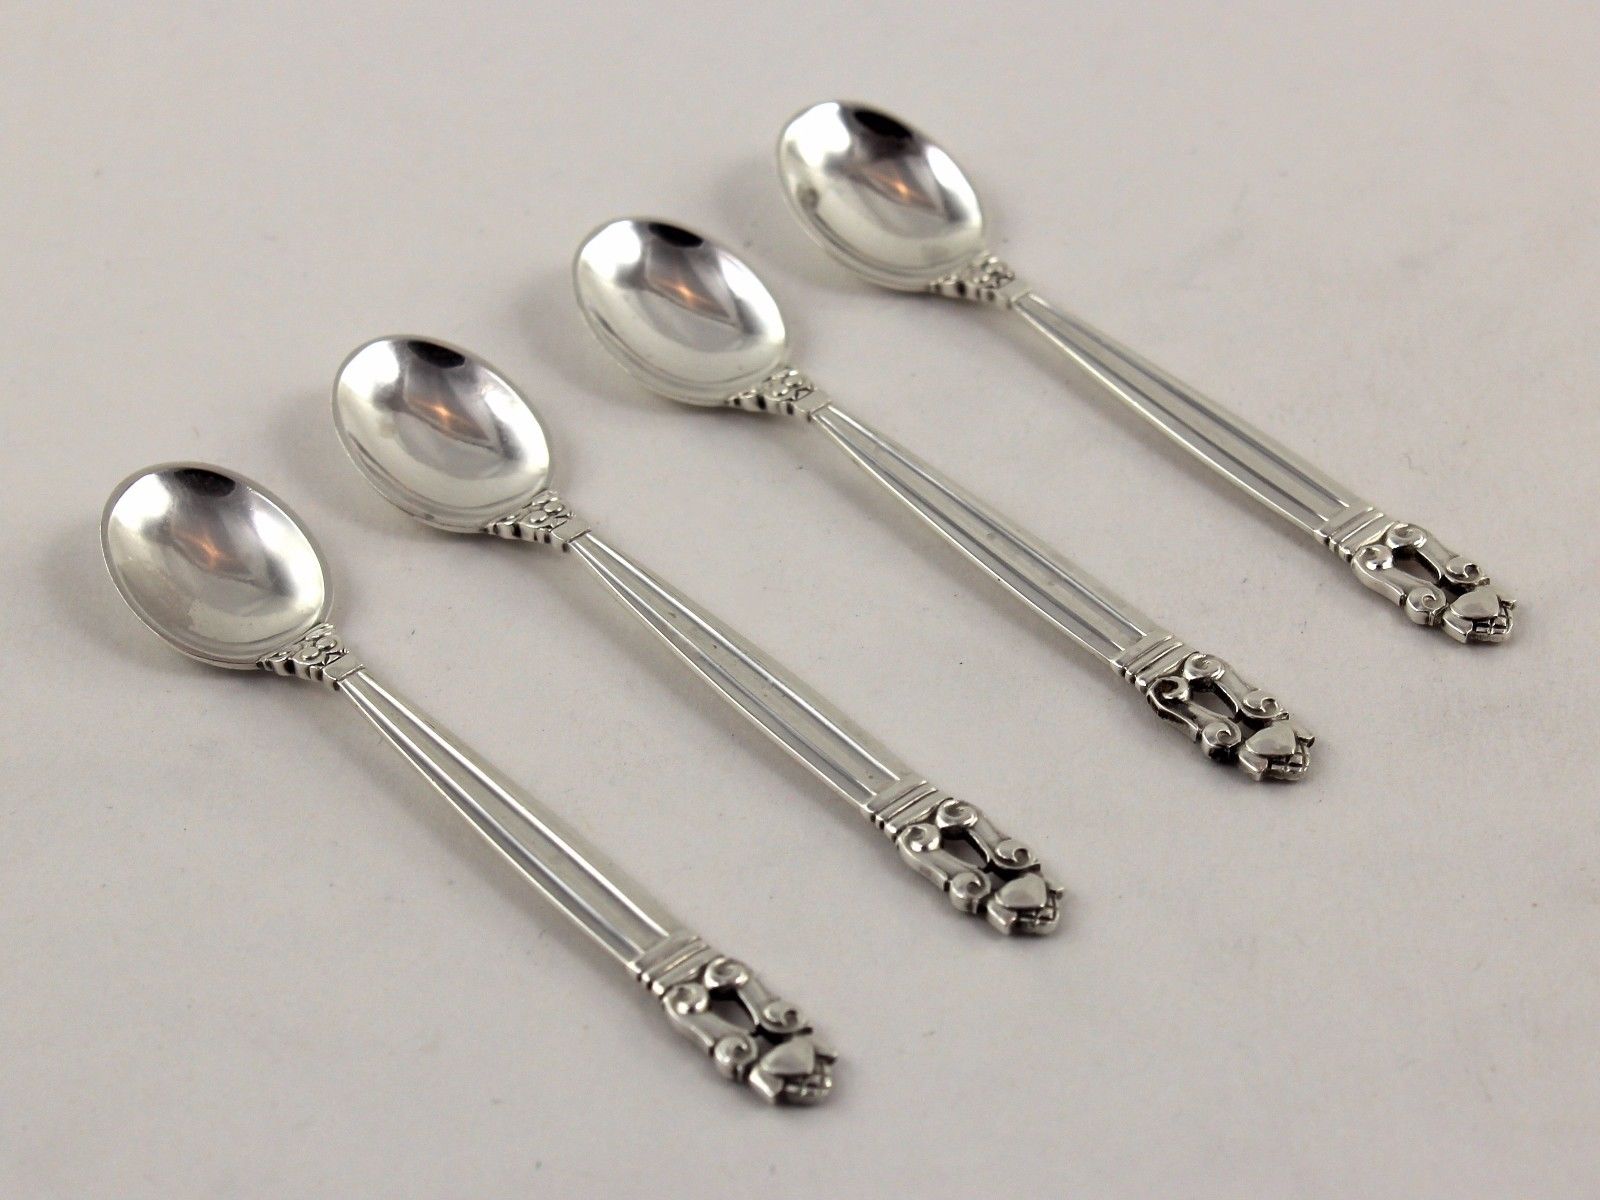 Georg Jensen Acorn Sterling Silver Salt Spoons - 3 1/4" - Set of 4